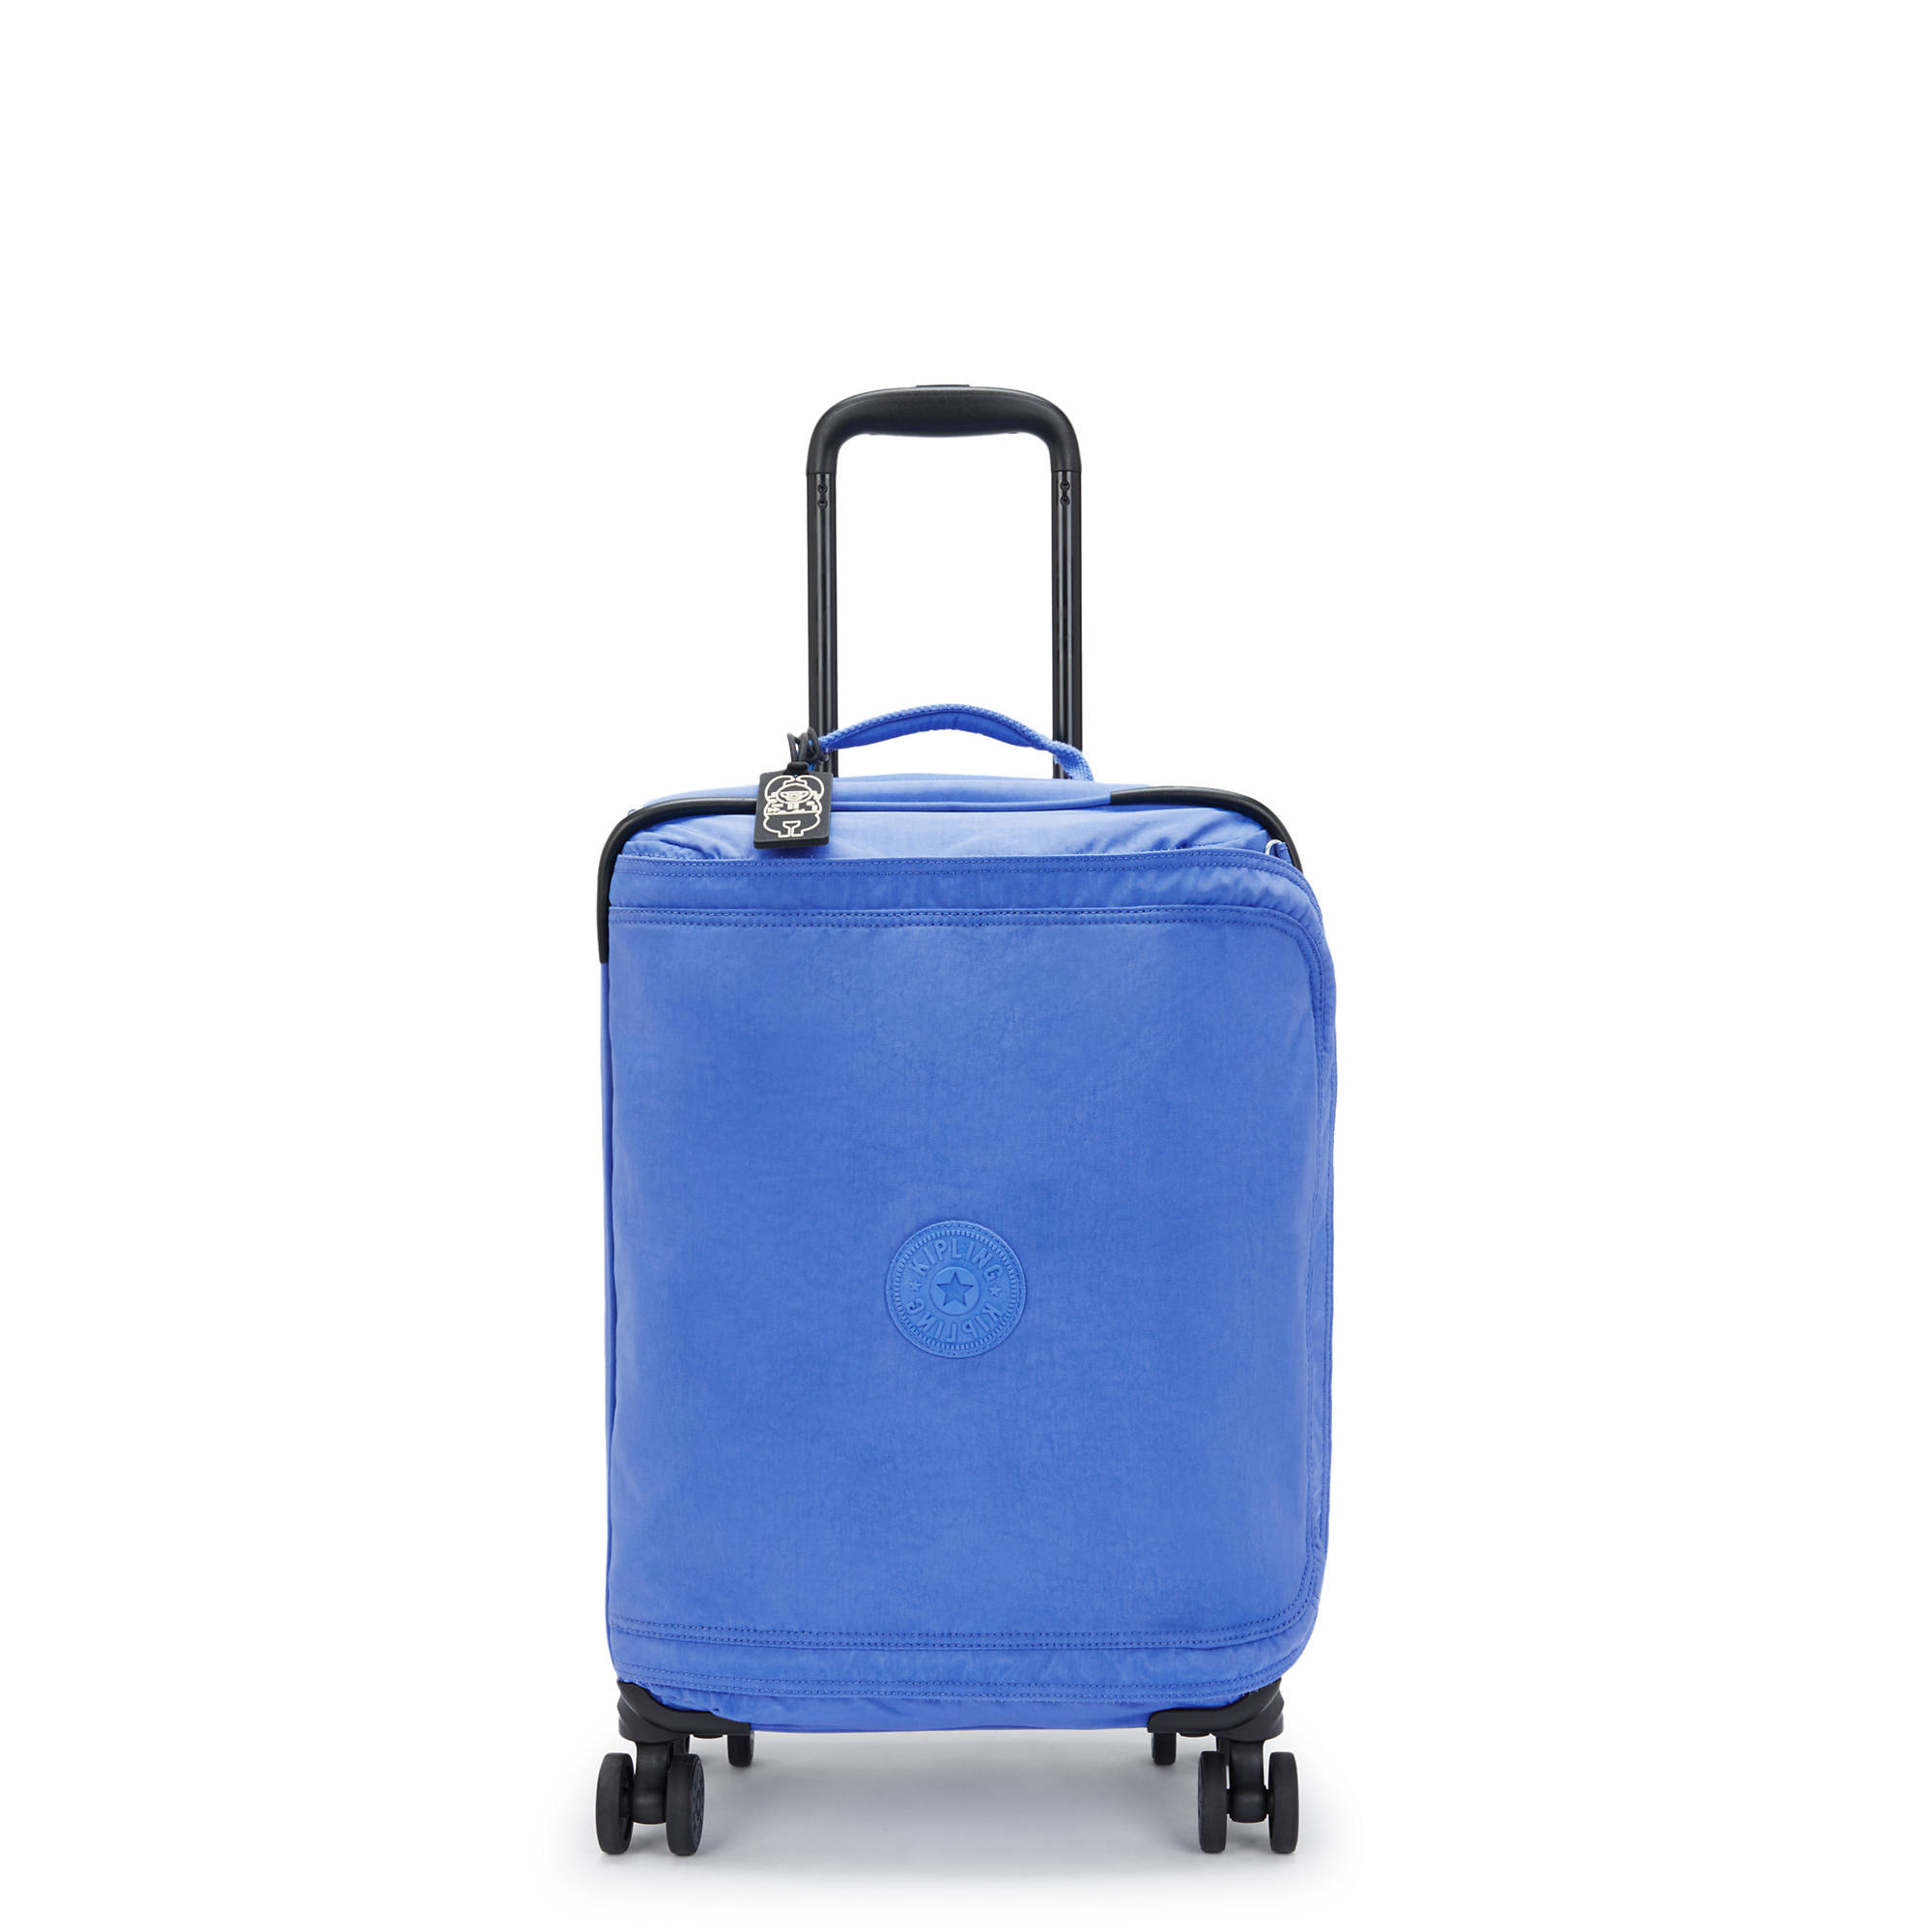 Kipling Spontaneous Small Rolling Luggage Havana Blue